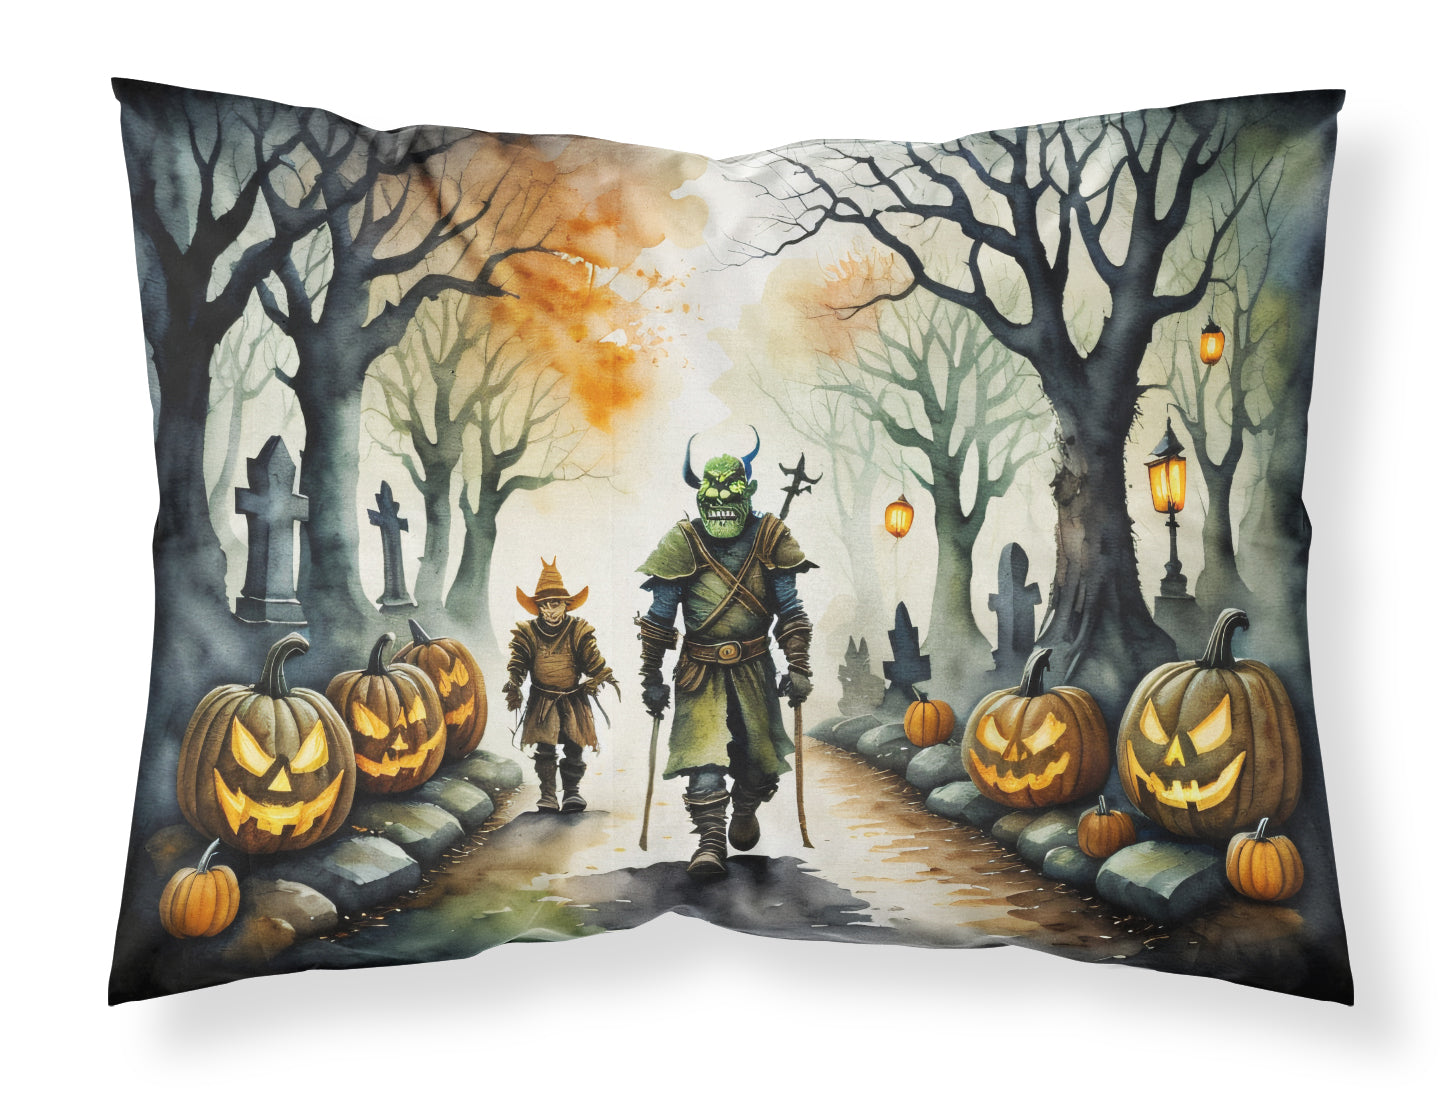 Buy this Orcs Spooky Halloween Fabric Standard Pillowcase